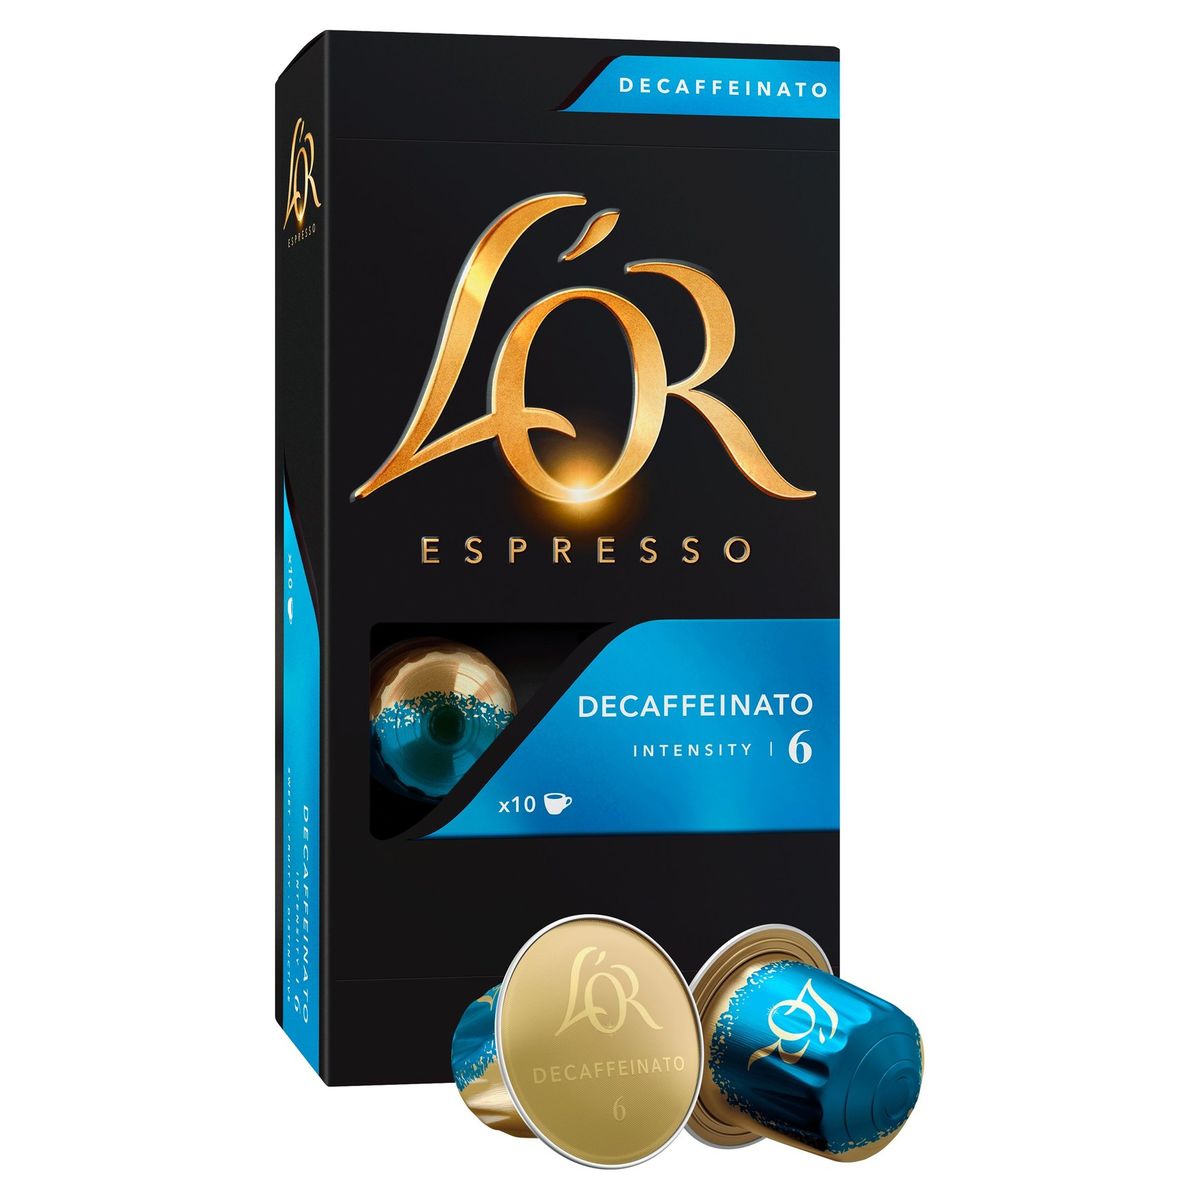 L'OR Koffie Capsules Espresso Decaffeinato Intensiteit 6 Nespresso®* Compatibel 10 stuks